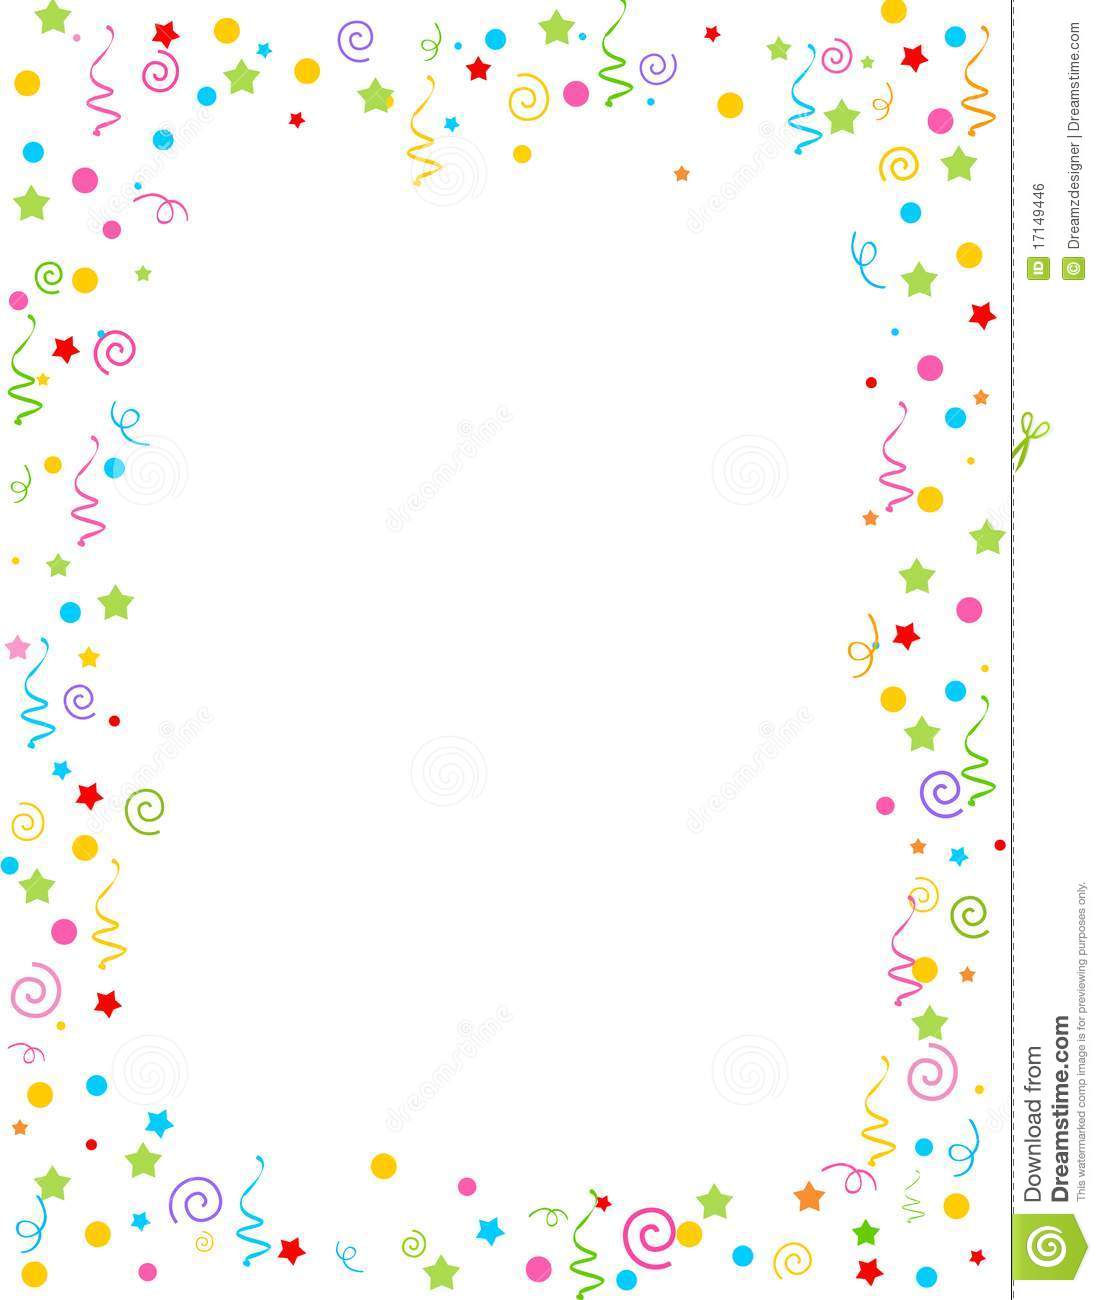 Falling Confetti Border Royalty Free Stock Image   Image  17149446